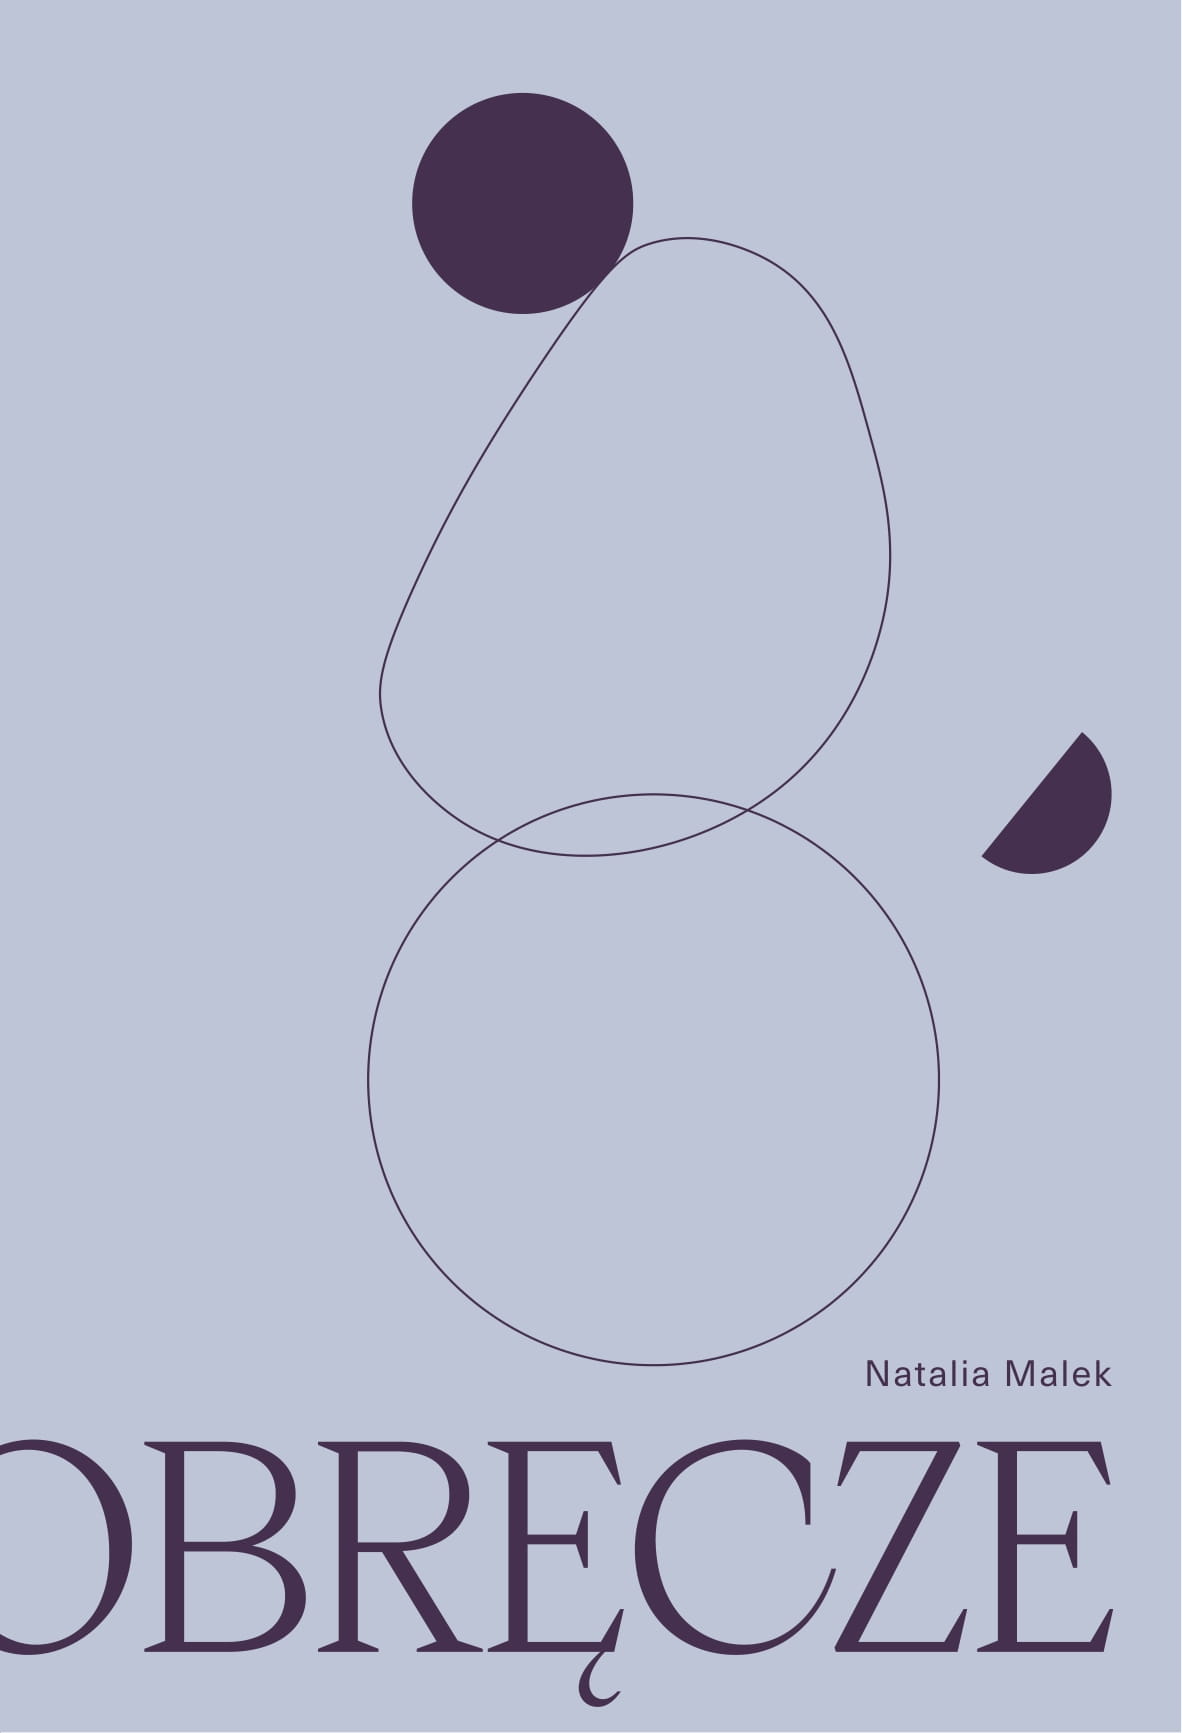 okładka książki Natalii Malek pt. Obręcze